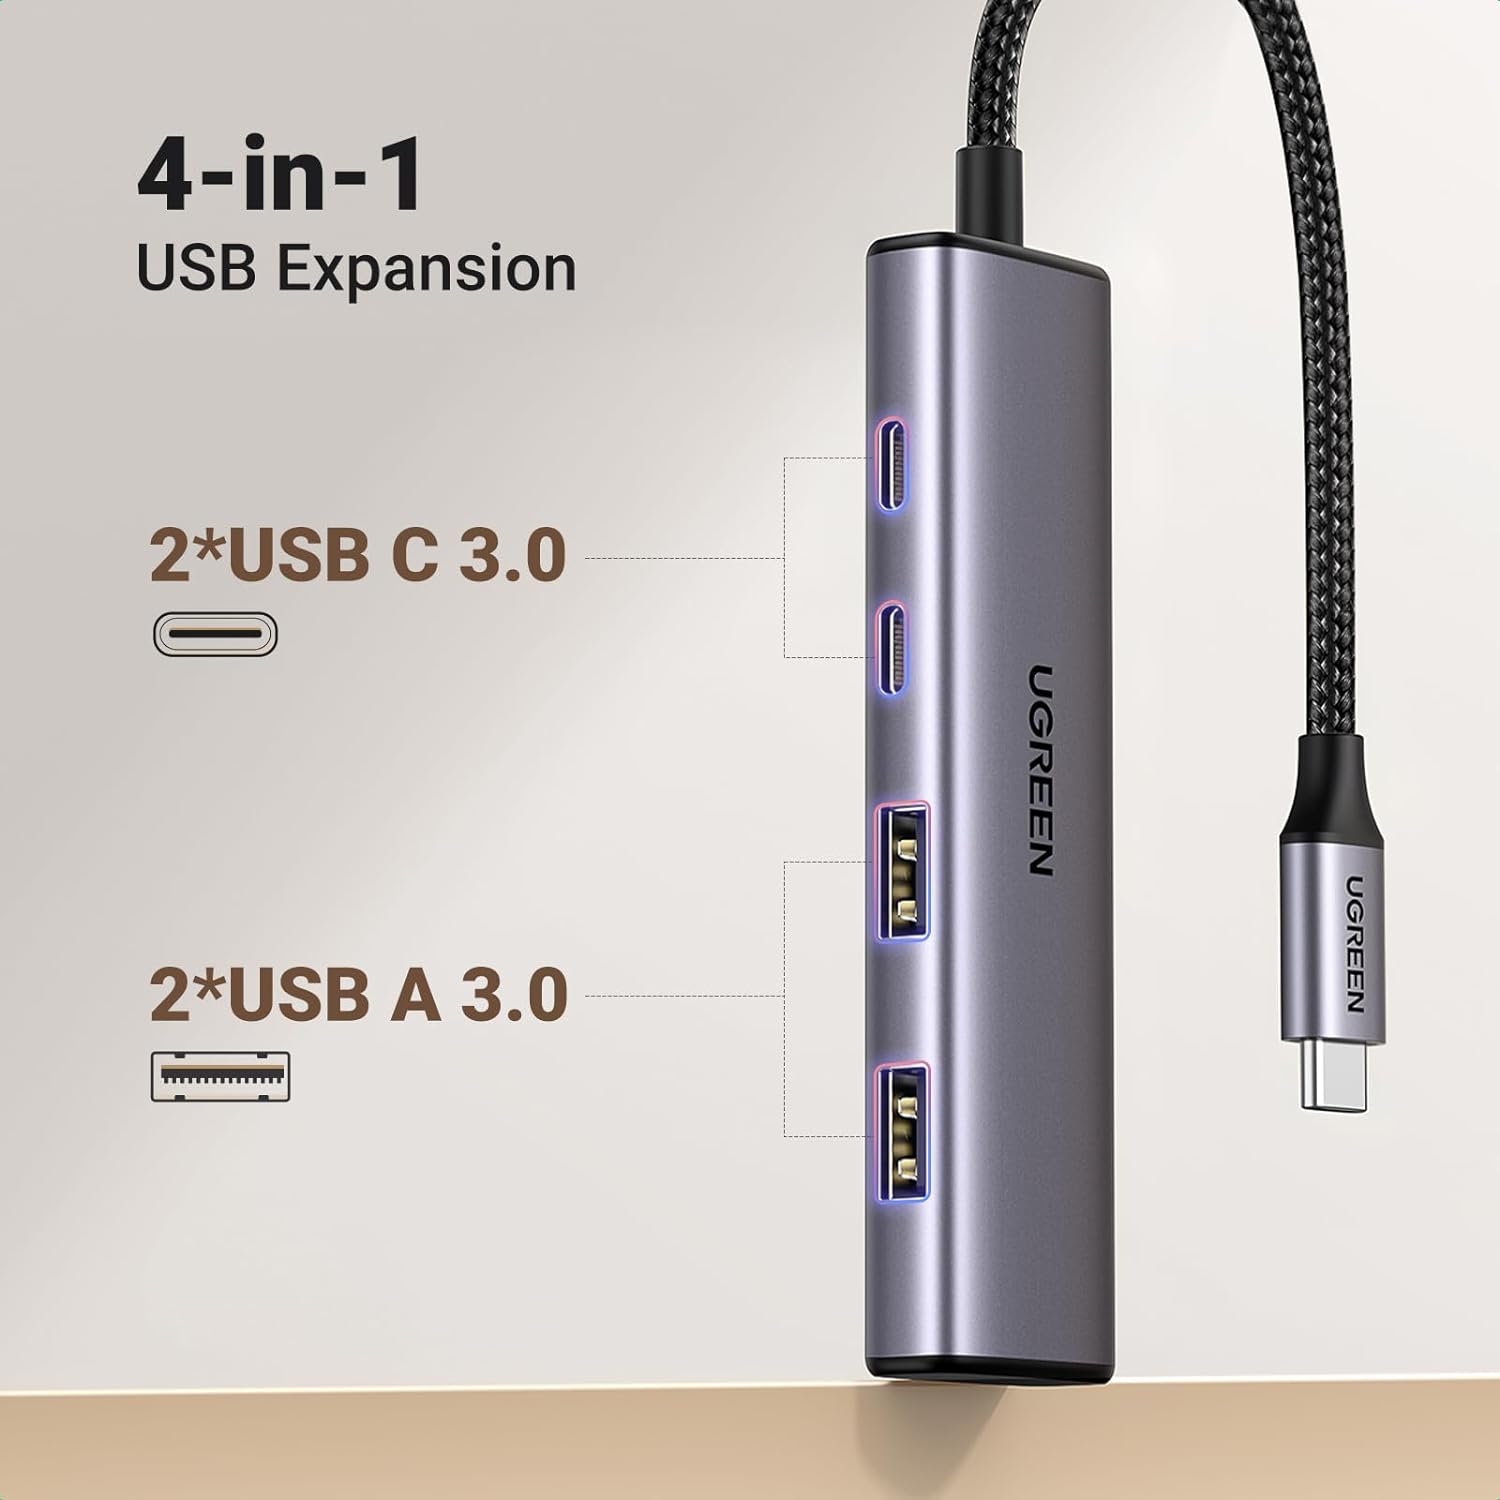  UGREEN Revodok 105 USB C Hub 5 in 1 Multiport Adapter